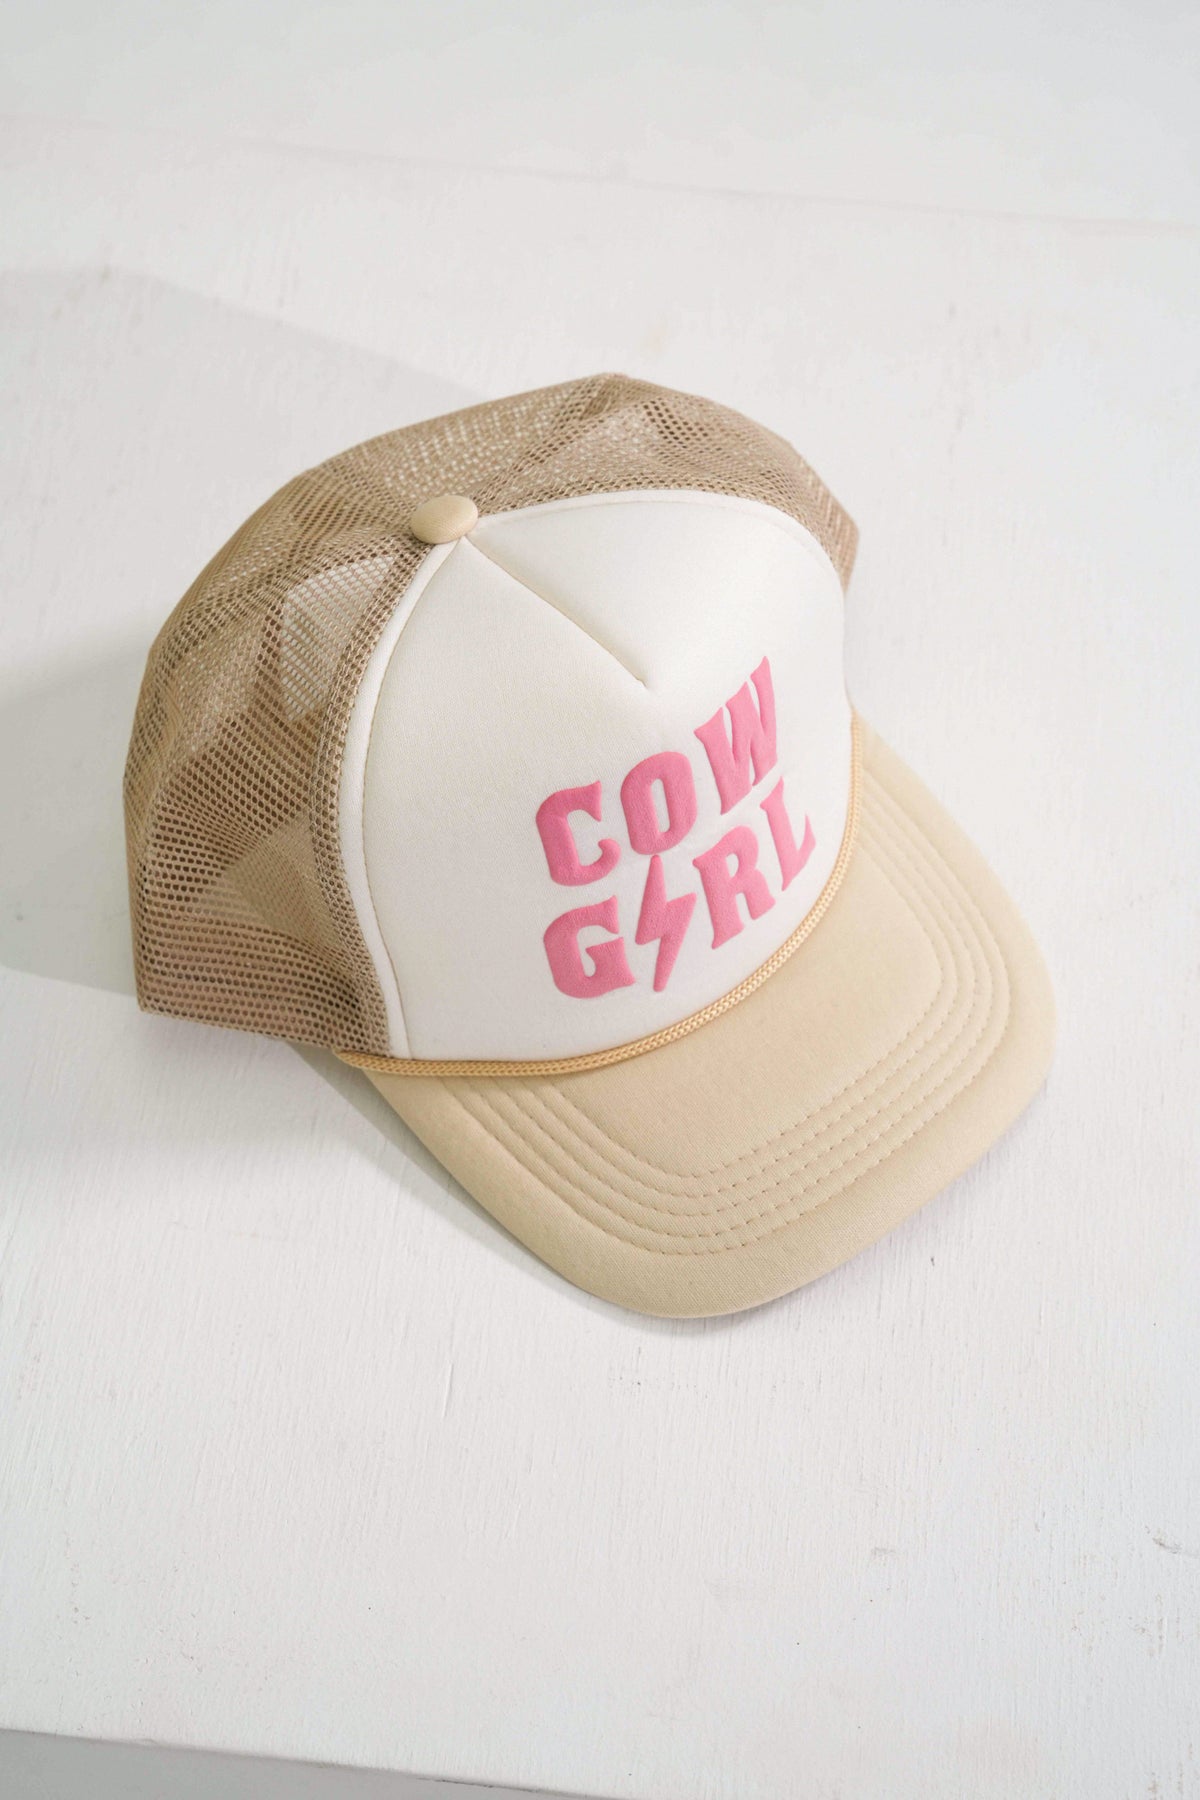 Cowgirl Trucker Hat